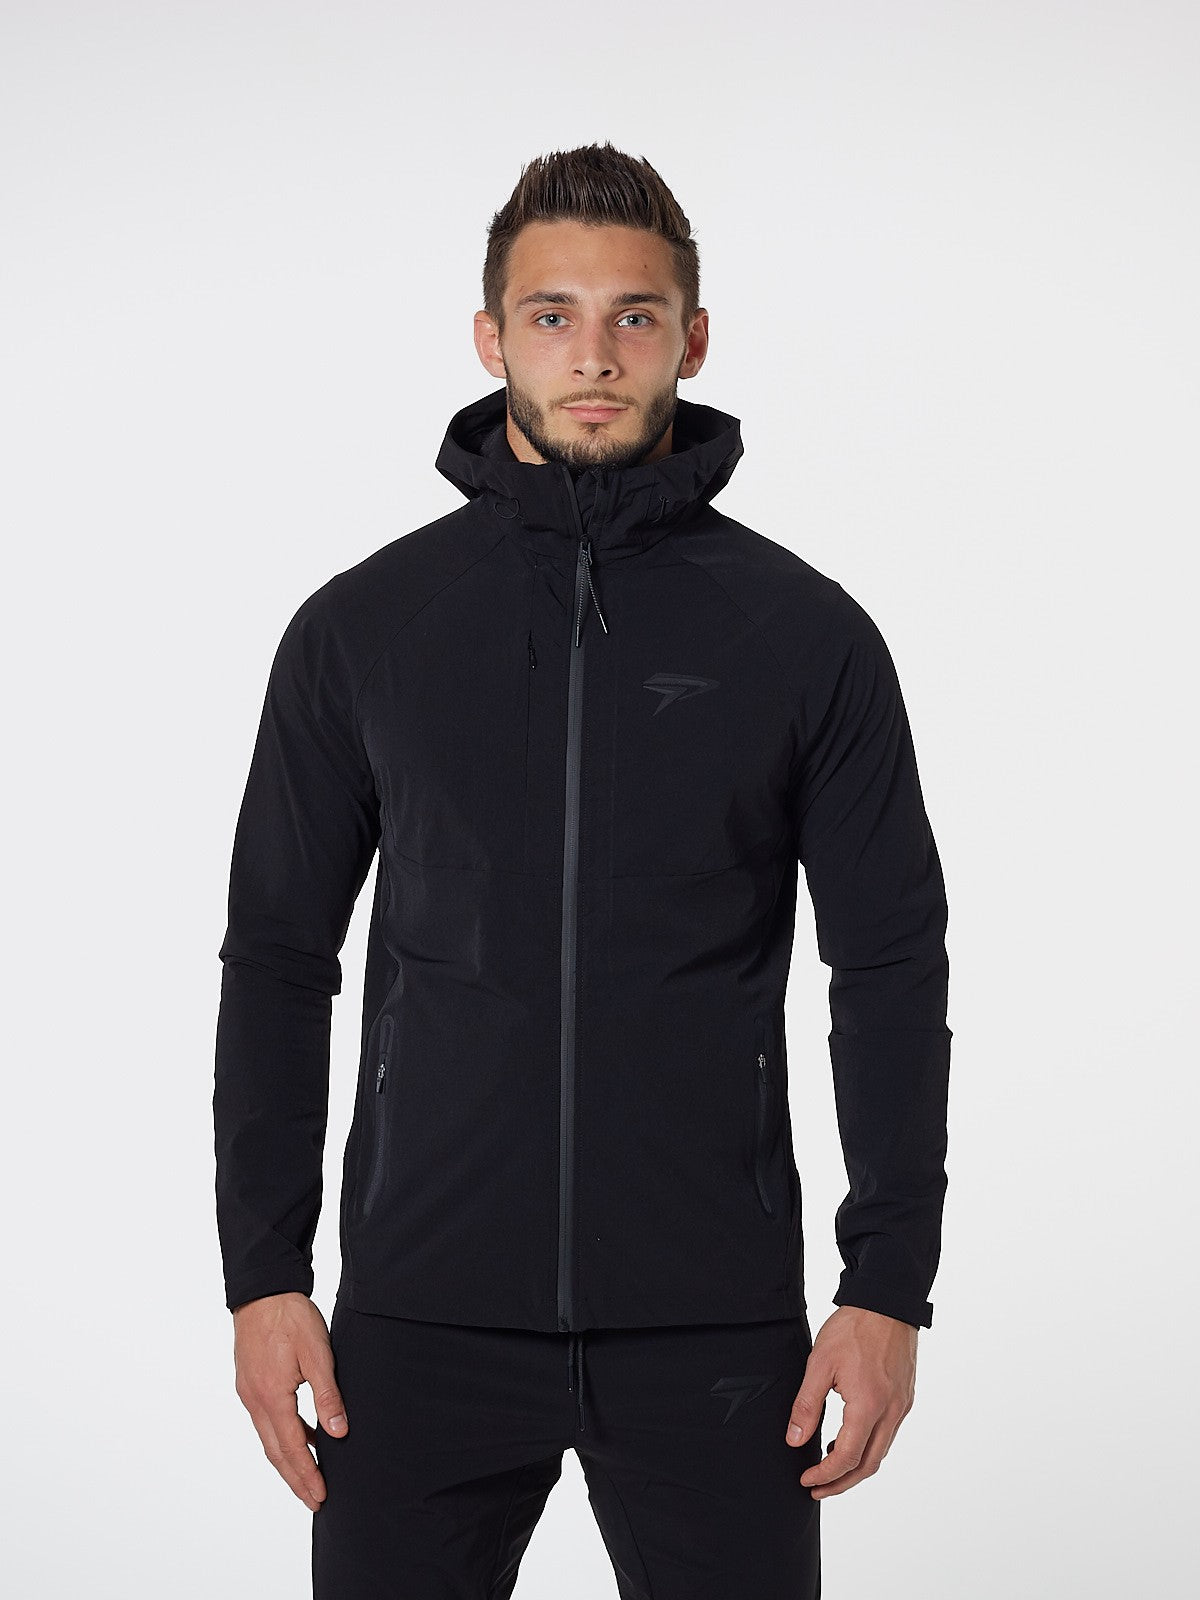 PHYSIQ APPAREL Aero Jacket Men's Zipped Track Top Black - Activemen Clothing